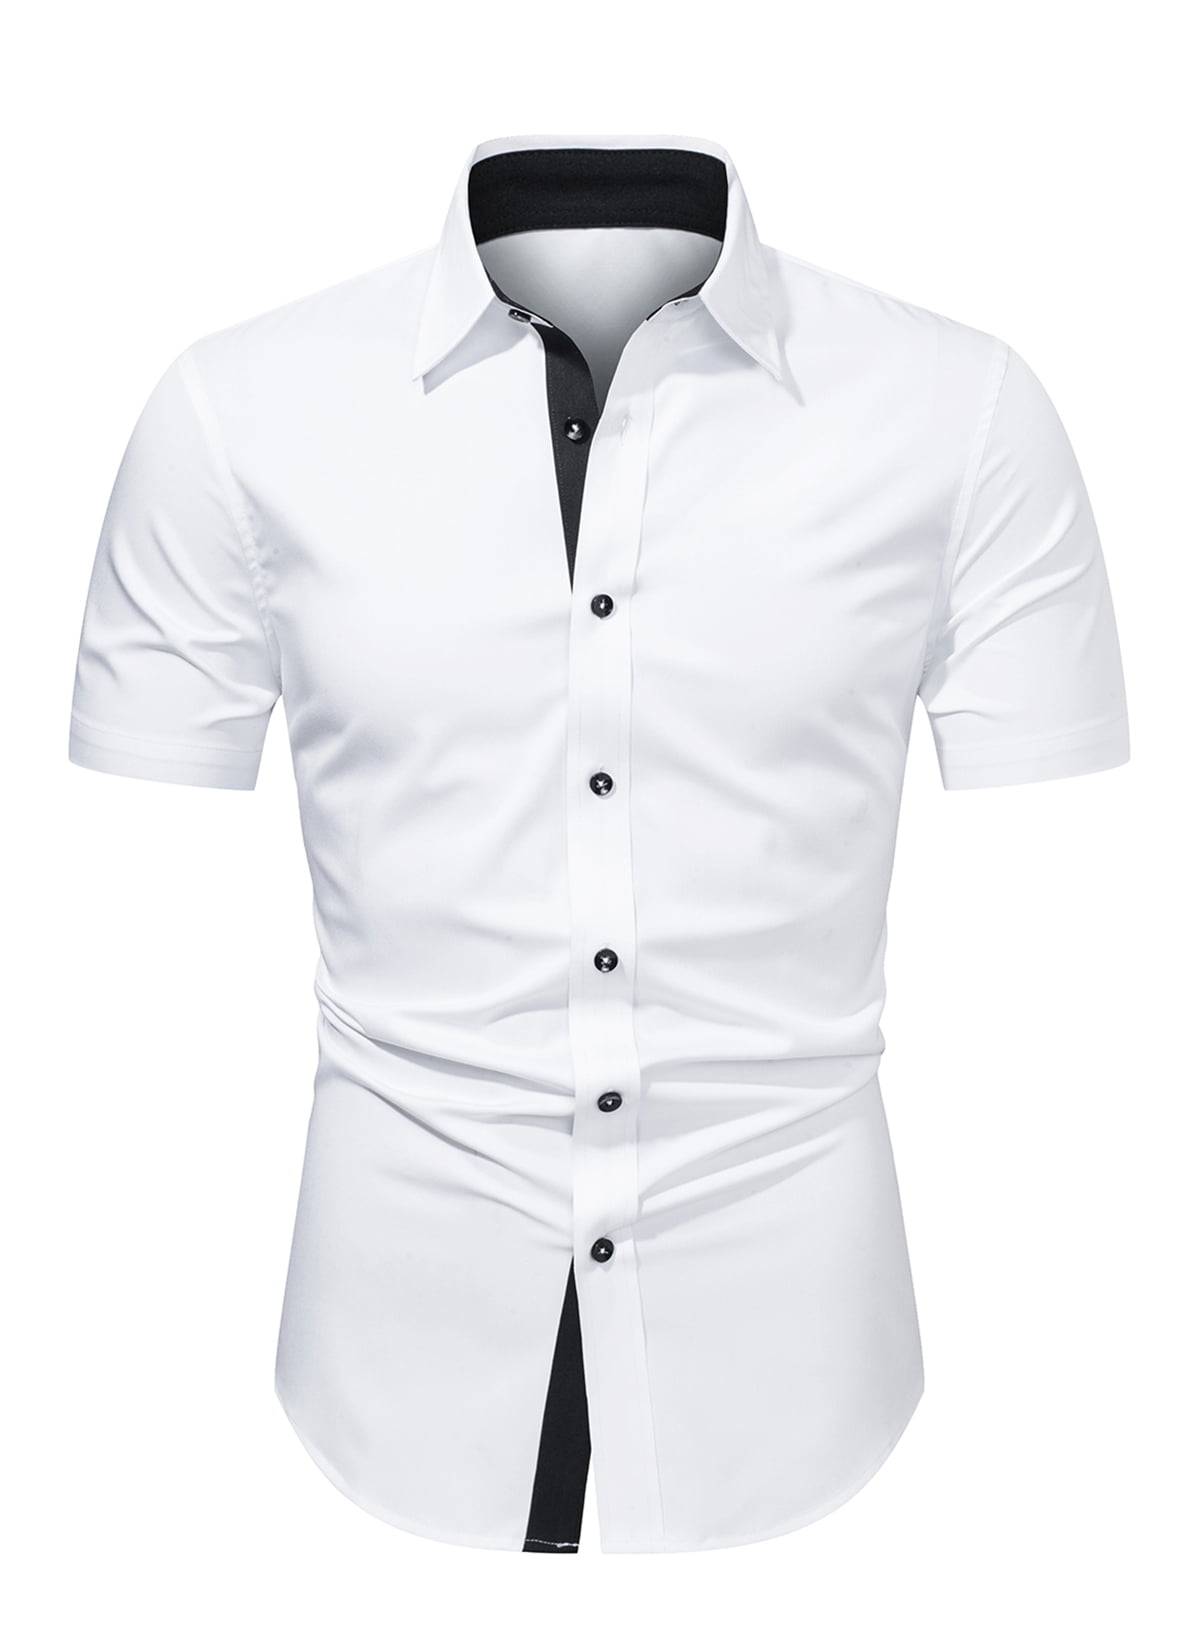 NeedBo Men's Dress Shirts Regular Fit Short Short Sleeve Business Casual Button  Down Shirt, White Size 4XL 